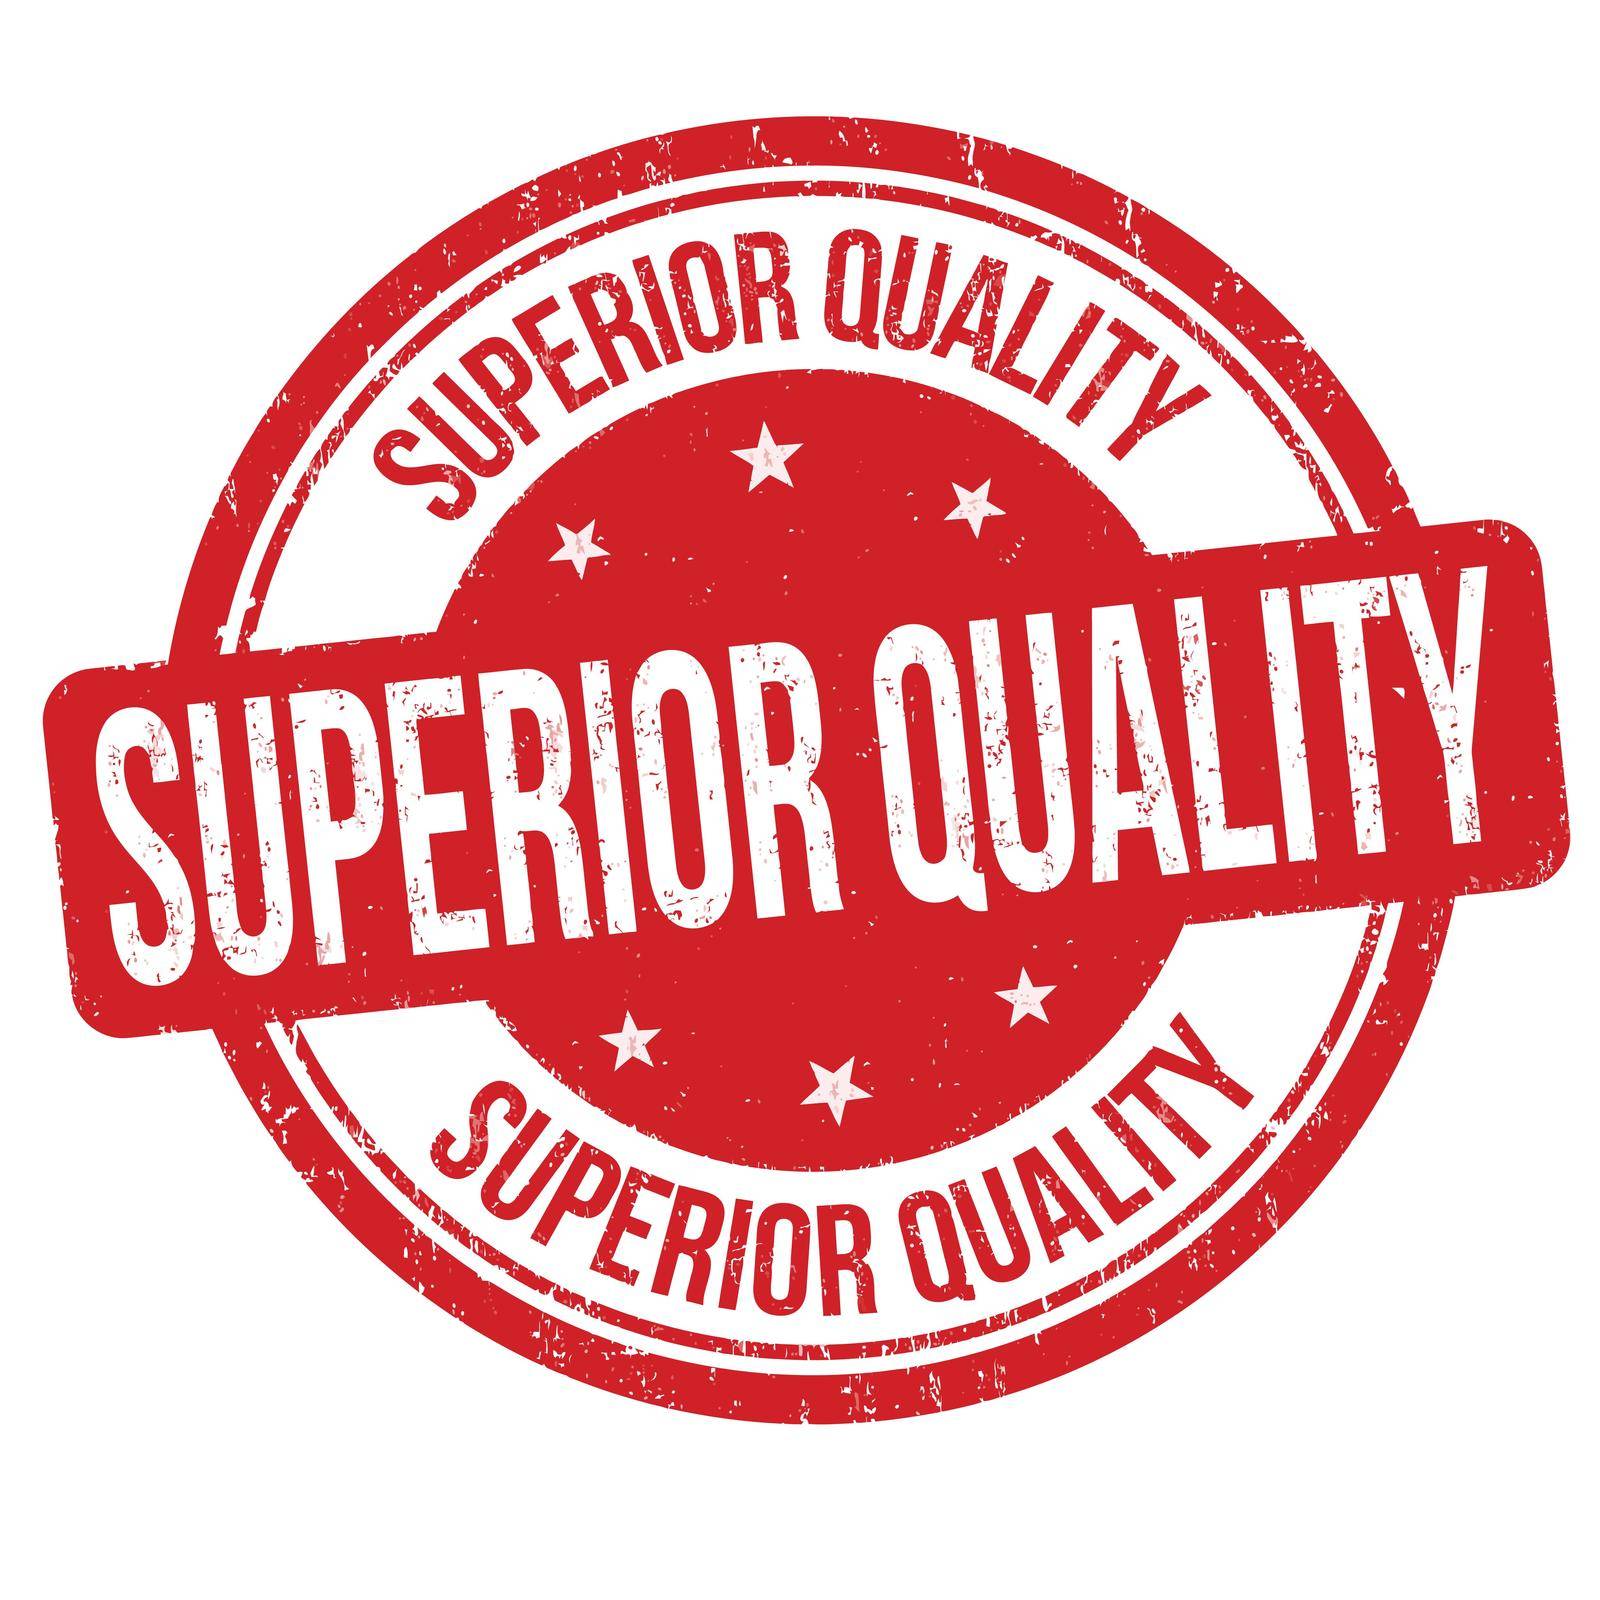 Superior quality grunge rubber stamp on white background, vector illustration